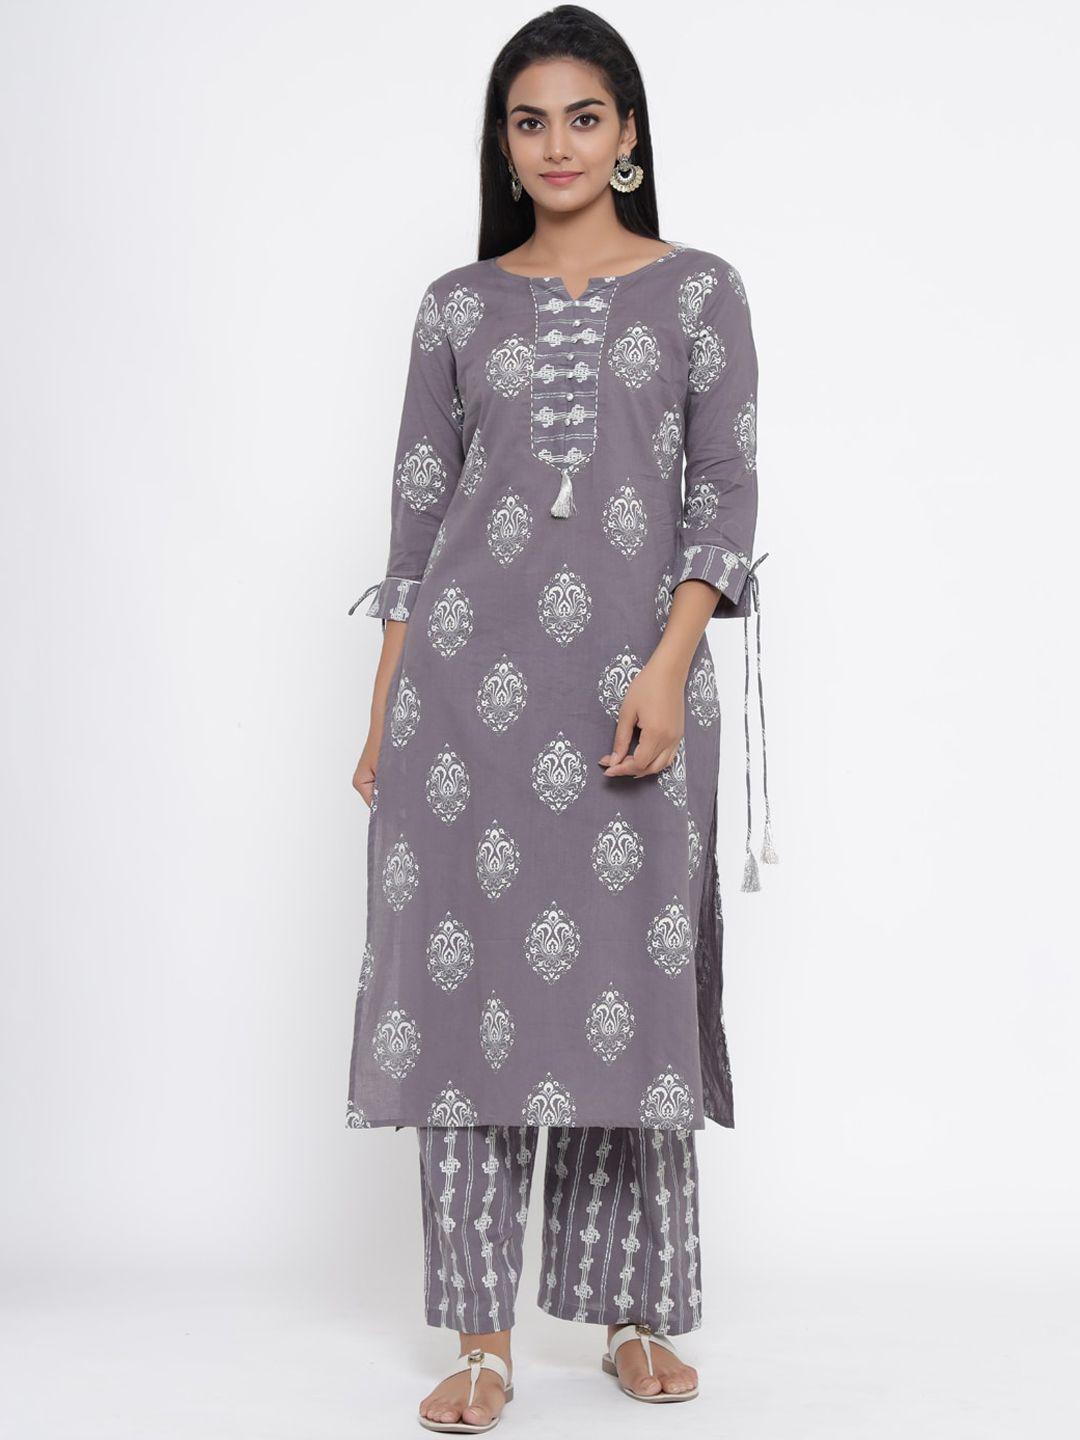 rangmayee women grey & off-white printed kurta with palazzos